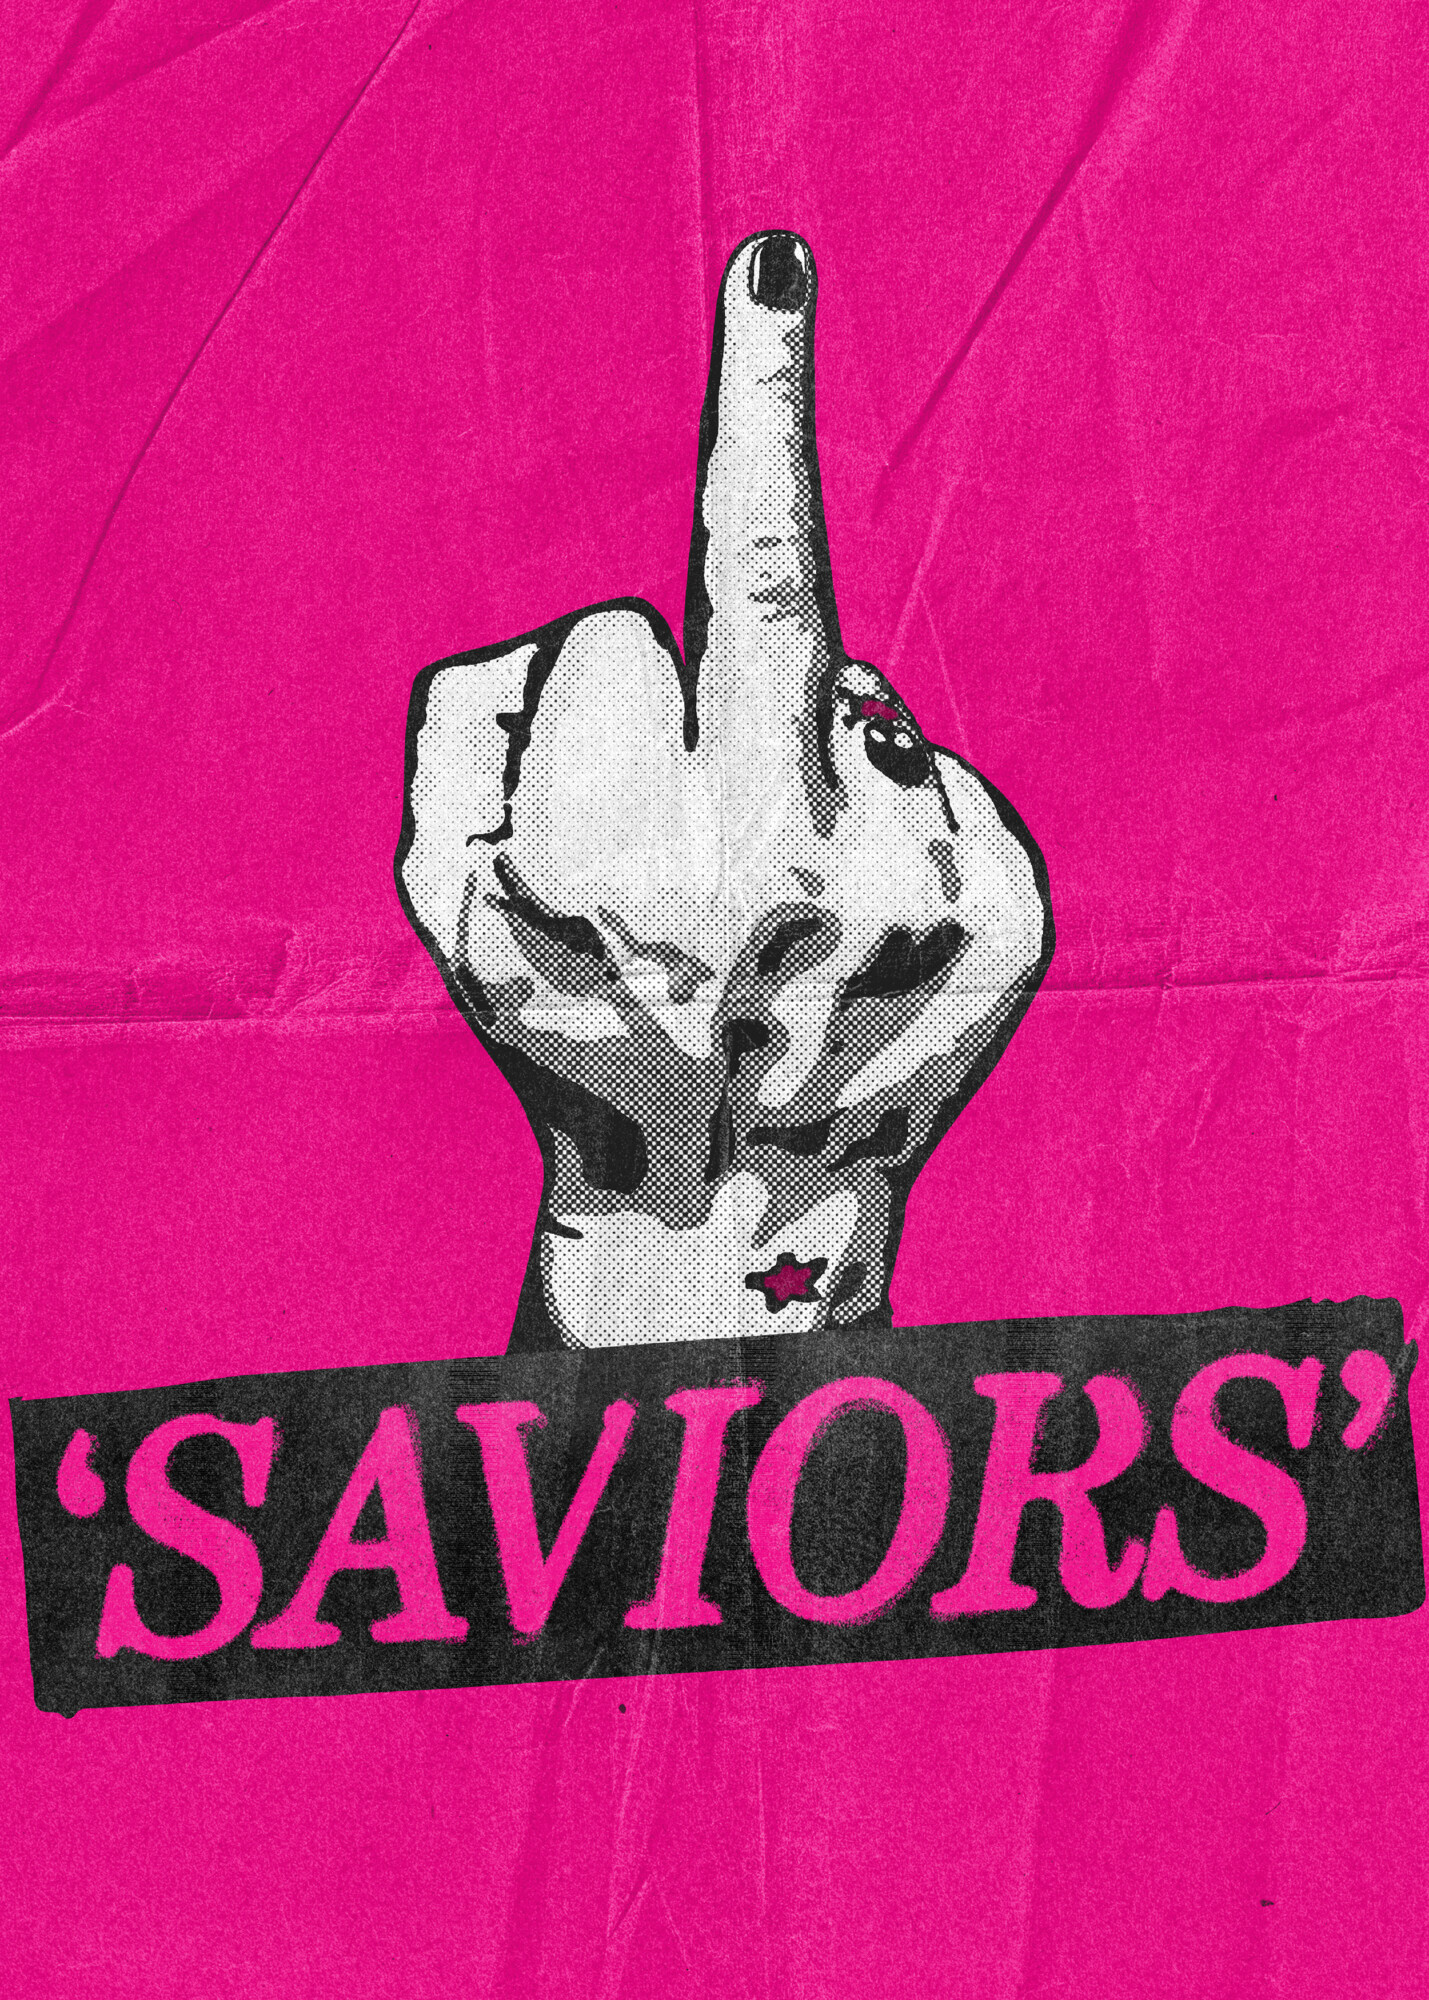 Green Day – Saviors